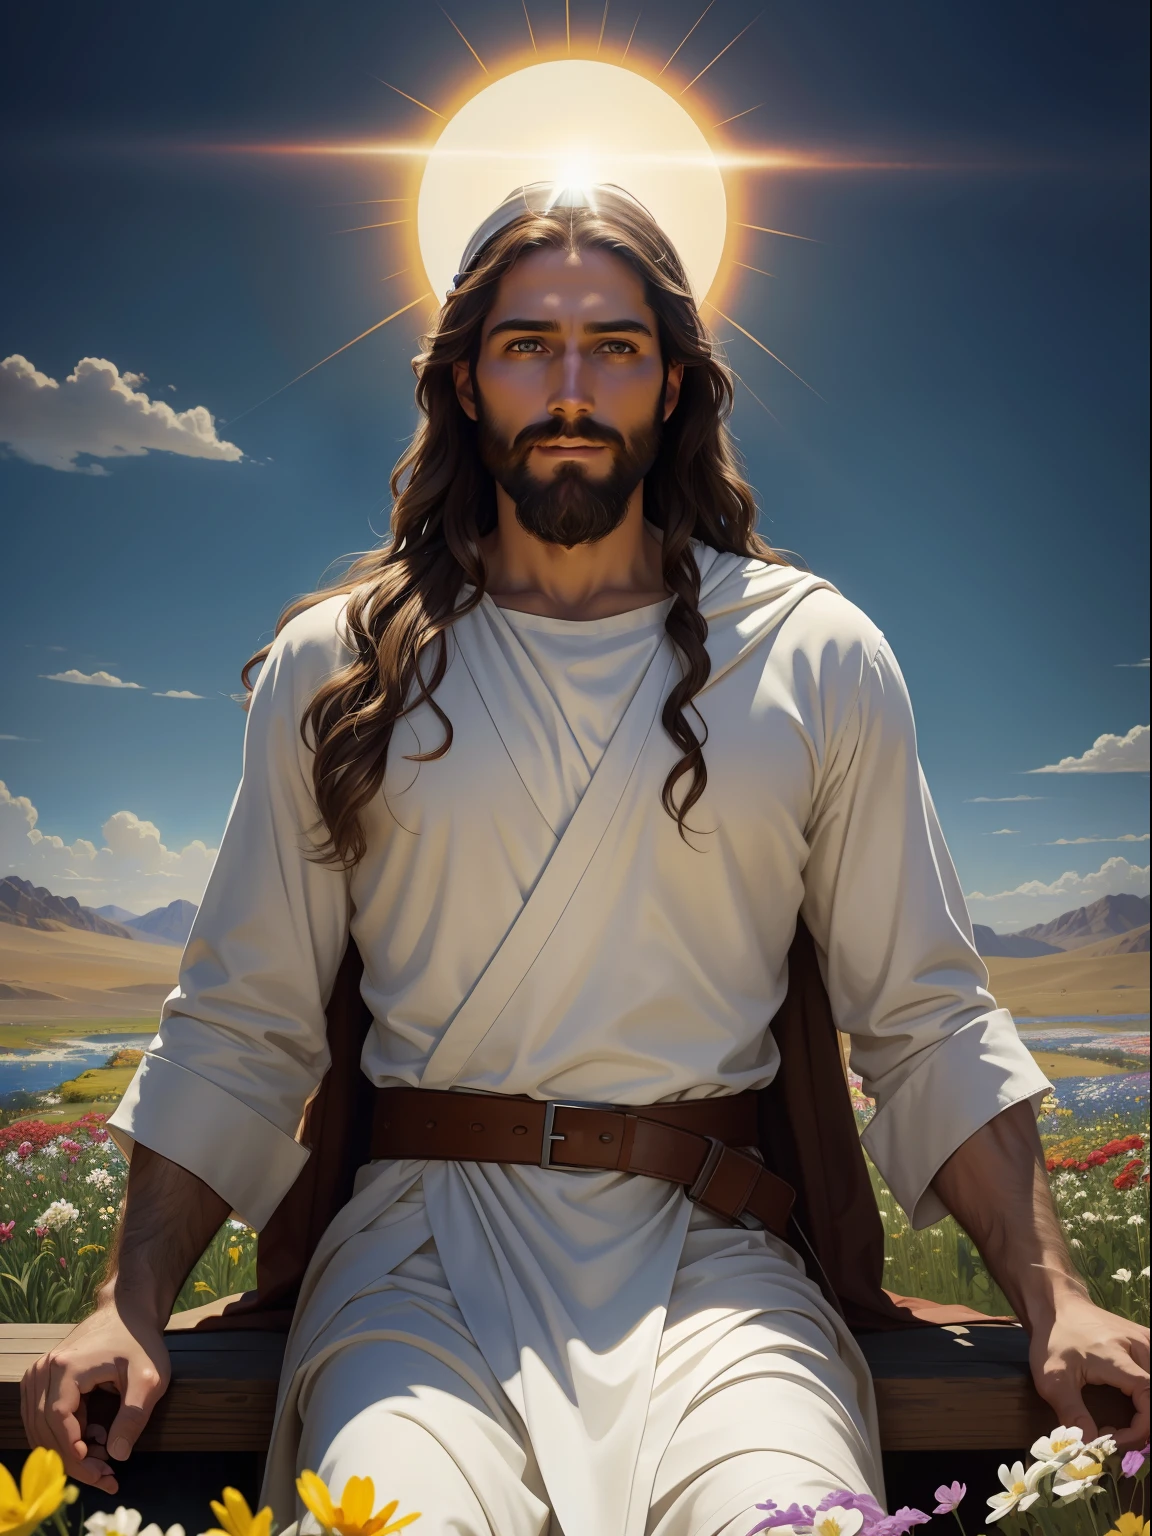 A beautiful ultra-thin 현실적인 portrait of Jesus the prophet, 33세의 히브리 남자, 긴 갈색 머리, 긴 갈색 수염, Jesus is 좌석 in a field of flowers, 팔을 벌린 채, 하늘은 파랗고 태양은 빛난다. 꽃은 붉은색을 포함해 다양한 색을 띠고 있다, 노란색, 파란색과 흰색, 예수께서는 흰 옷을 입고 머리 주위에 흰 빛이 있습니다, 그는 웃고 흰 가운을 입은 시청자를 바라보고 있다, 정면에서, 좌석, 두 팔을 벌려, 성경의, 현실적인, 사막의 복잡한 디테일, 애보트 풀러 그레이브, 바르톨로메오 에스테반 무리요, JC 레이엔데커, 크레이그 멀린스, 피터 폴 루벤스, (카라바조), 아트스테이션의 트렌드, 8K, 컨셉 아트, Photo현실적인, 현실적인, 삽화 , 오일 페인팅, 초현실주의, Hyper현실적인, 브러쉬, 디지털 아트, 스타일, 수채화